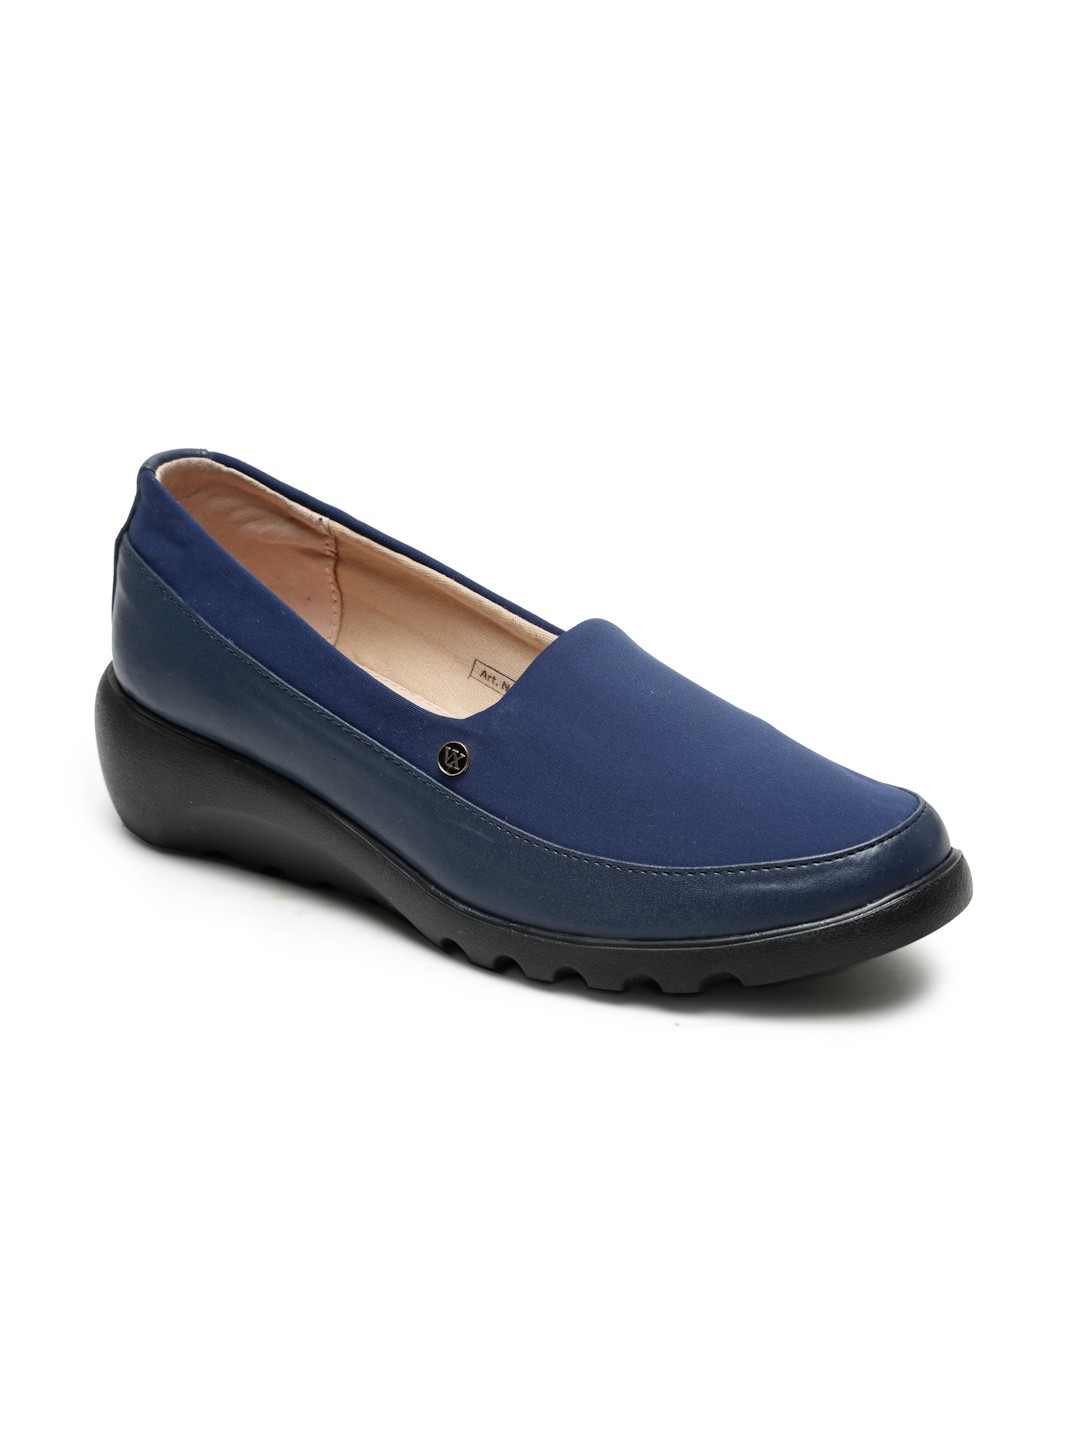 Buy Von Wellx Germany Comfort Women's Blue Casual Shoes Elsa Online in Sharjah